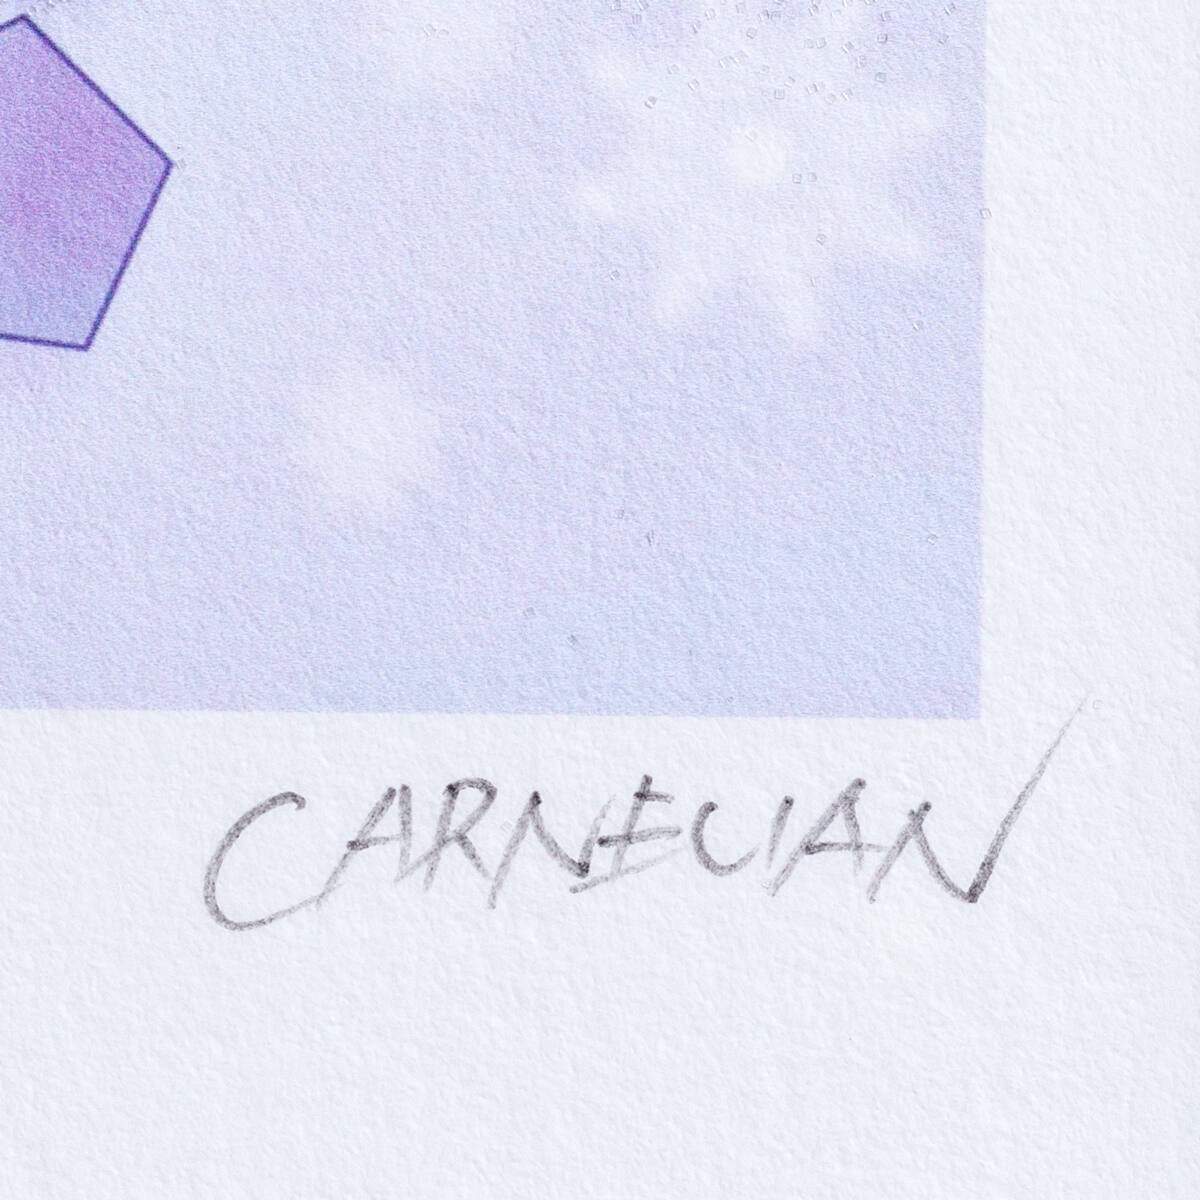 CARNELIAN（カーネリアン）『雪の妖精』ミックスドメディア 版画 本人 鉛筆 サイン80部限定 アールビバン保証書付_画像5